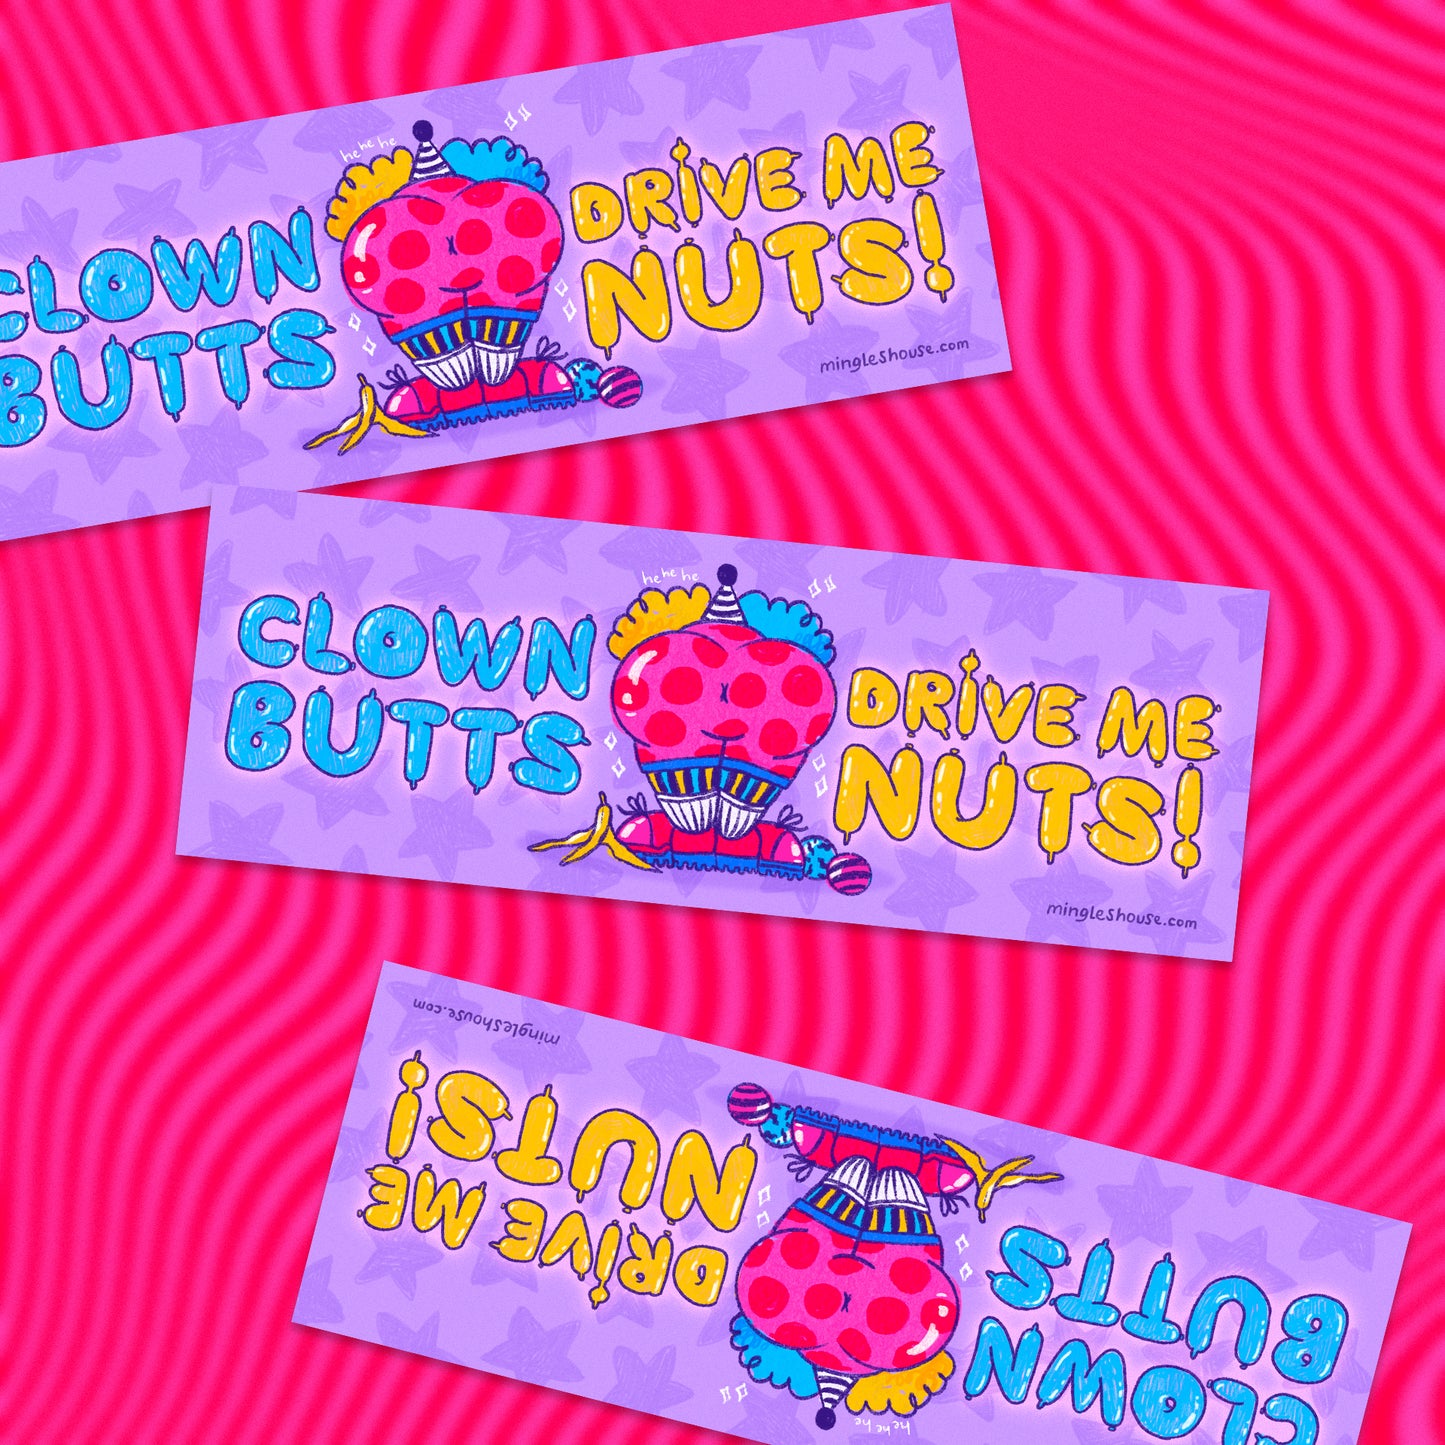 Bumper Sticker: Clown Butts Drive Me Nuts!